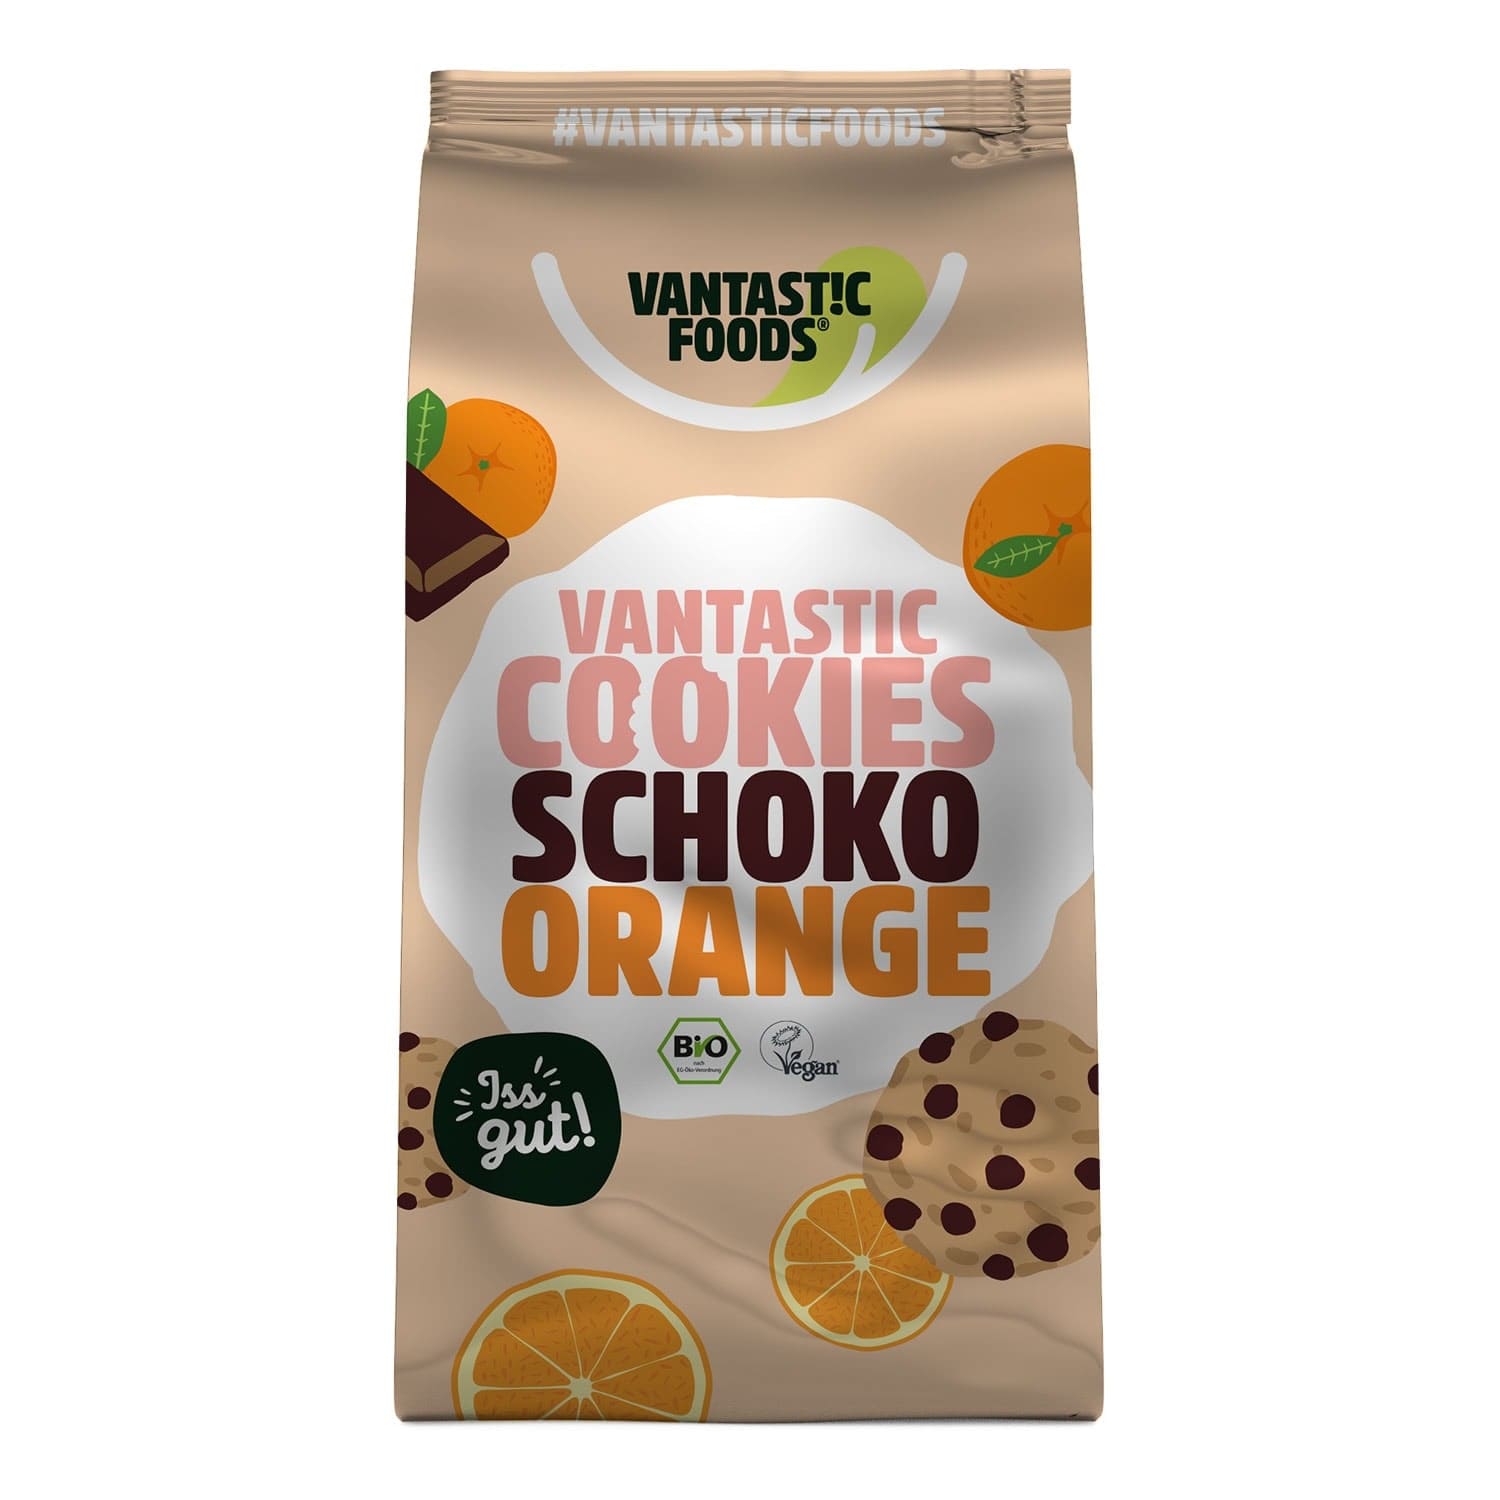 Vantastic foods VANTASTIC COOKIES Schoko-Orange, Bio